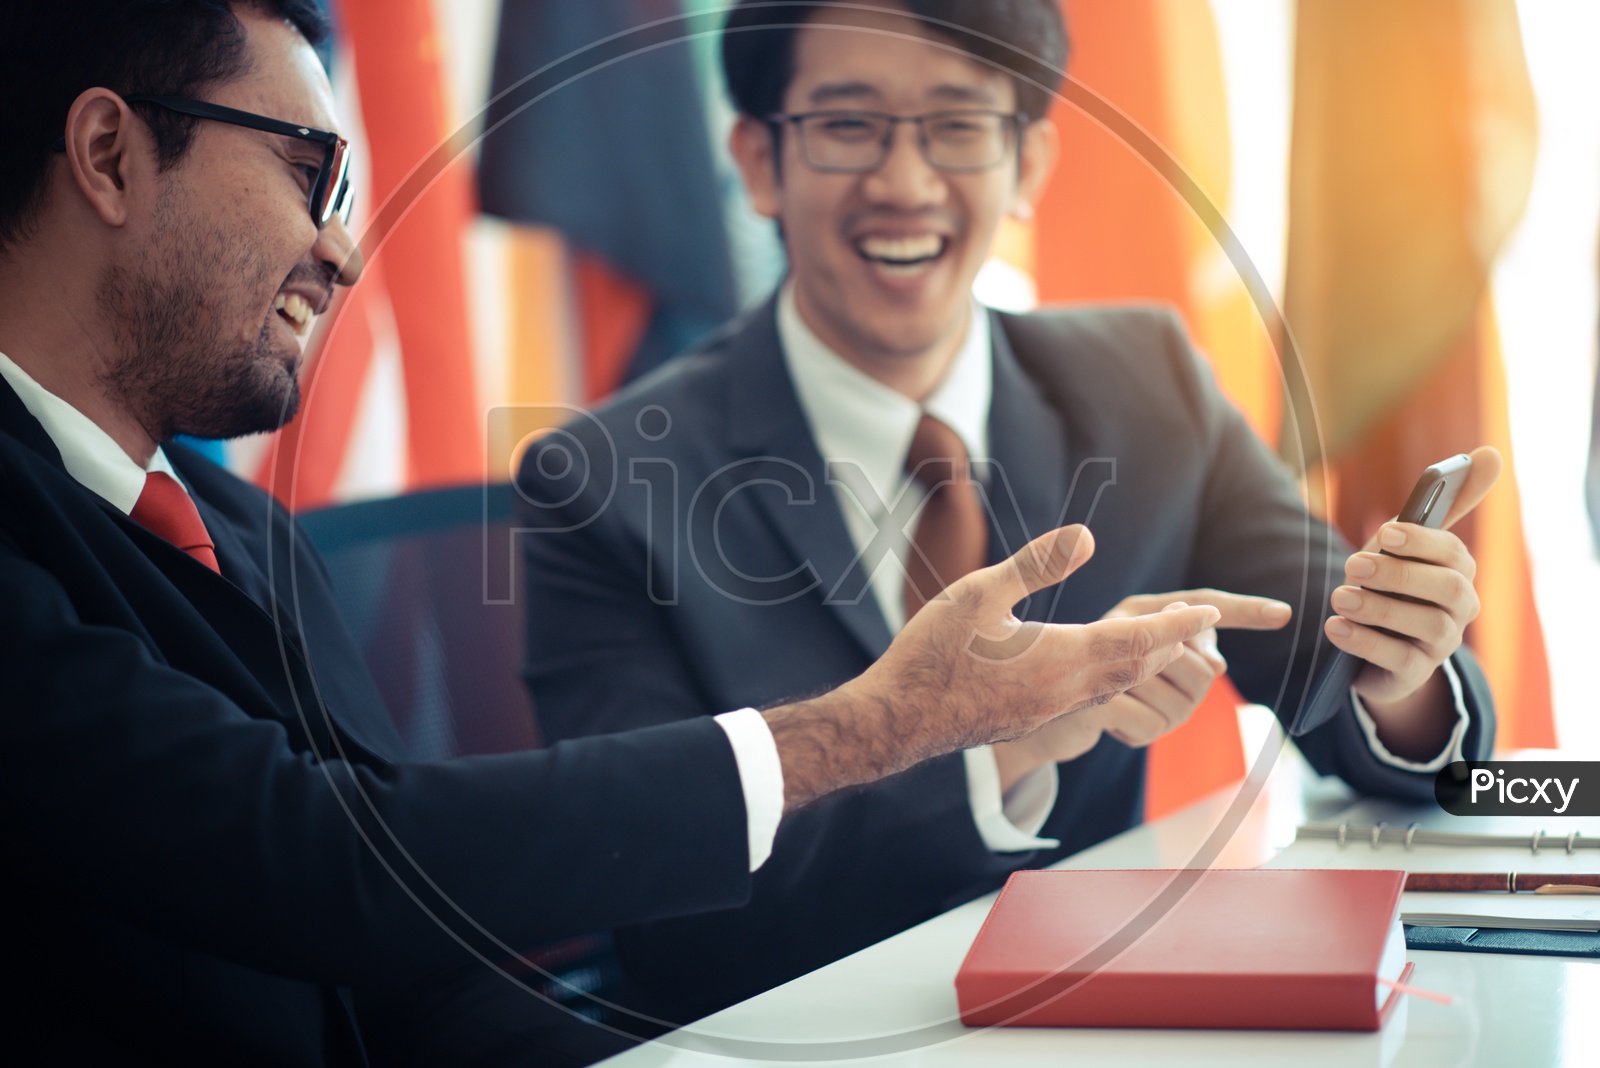 International Businessmen smiling using a smartphone